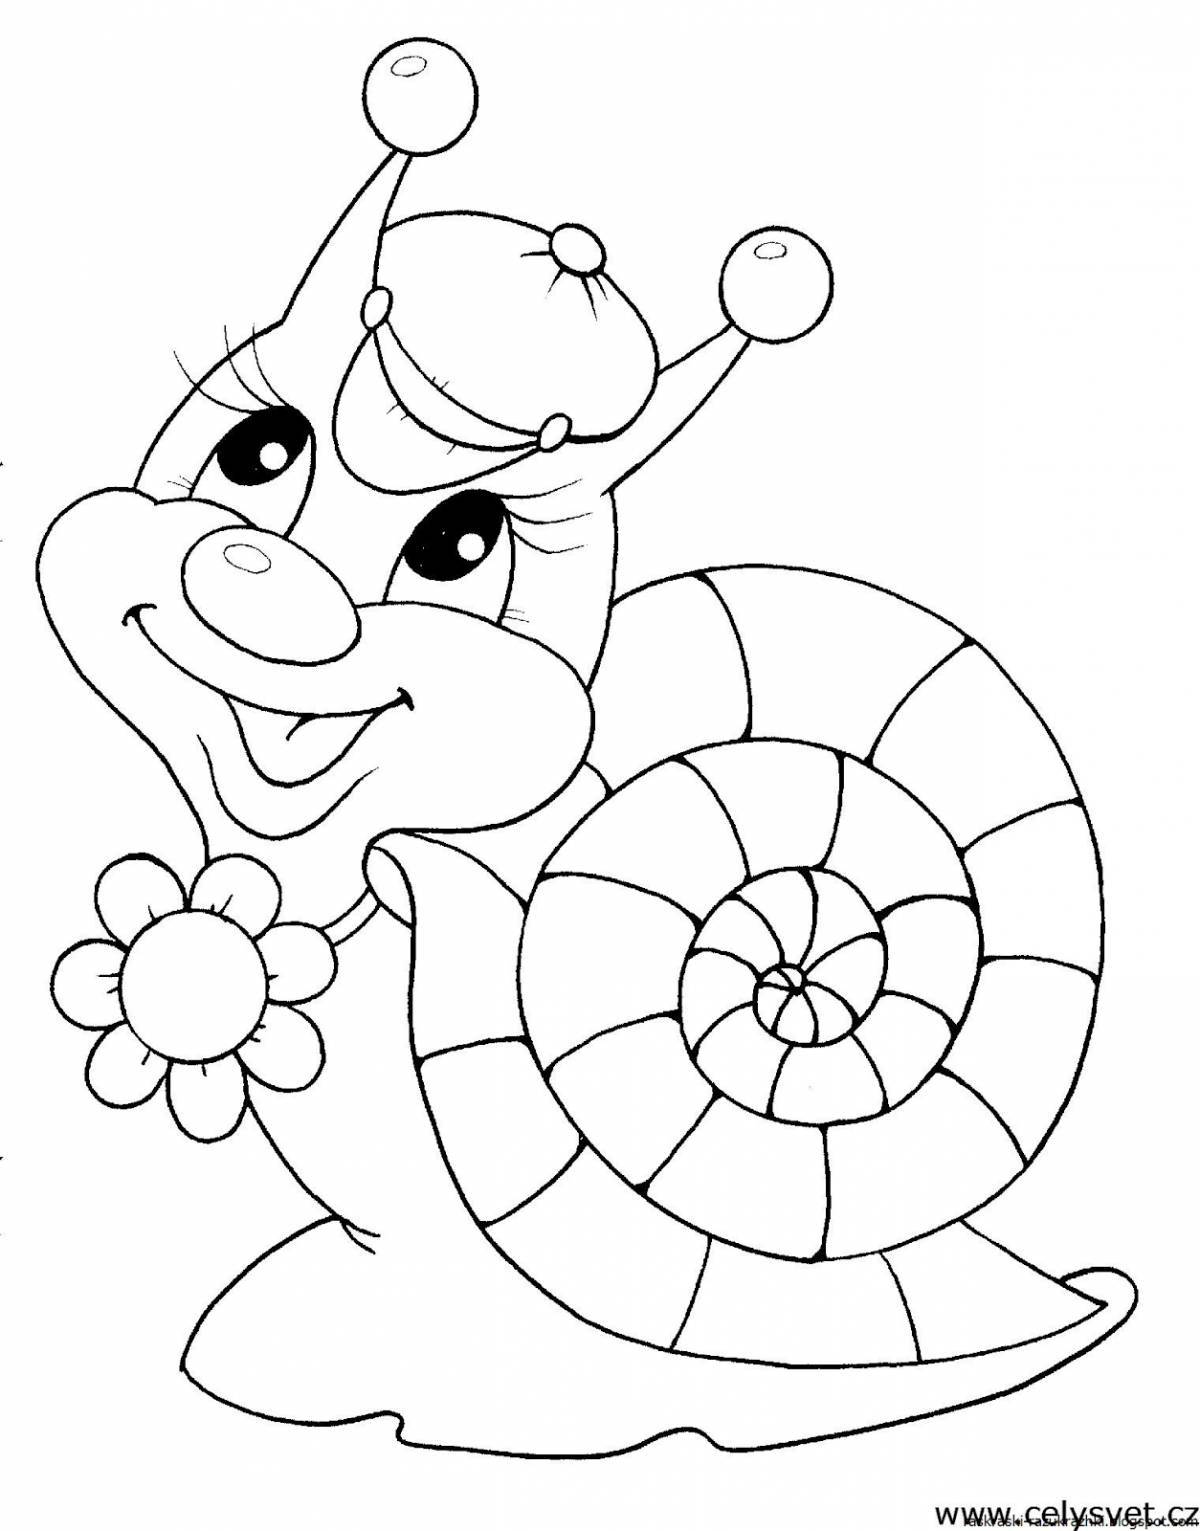 Fun snail coloring for kids